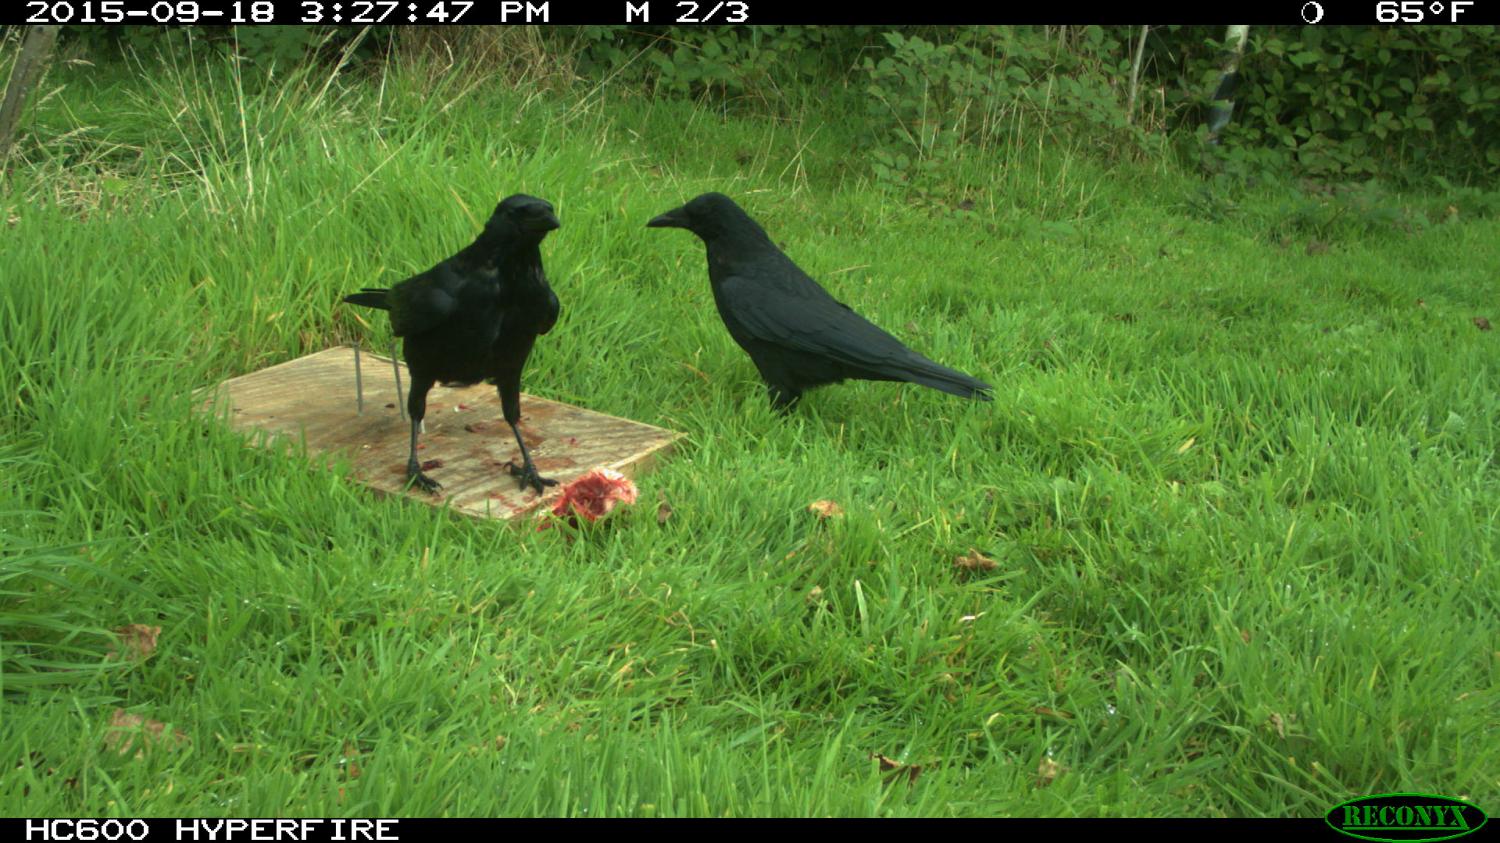 Scavenger crows provide public service, research shows